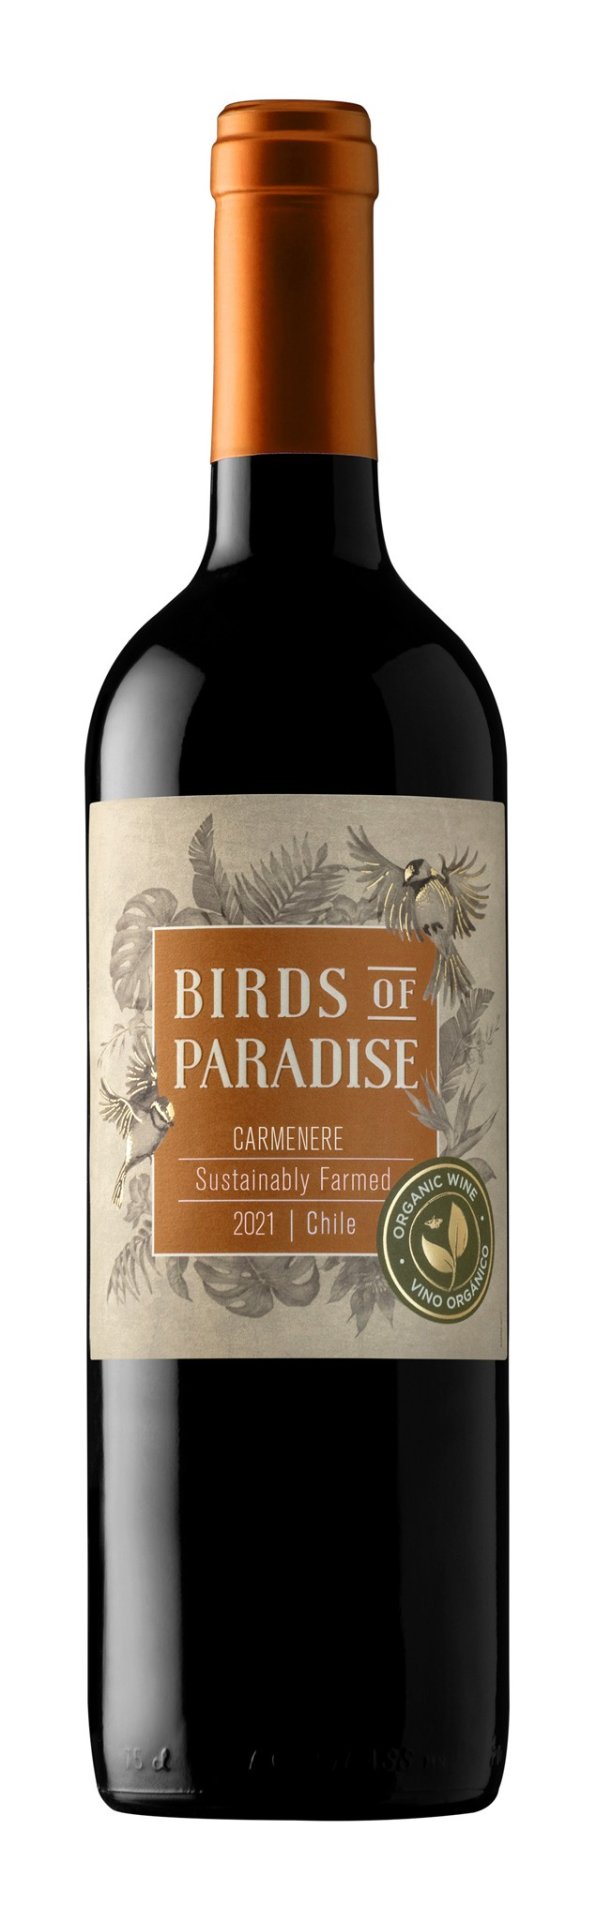 Birds of Paradise Carmenere Reserva